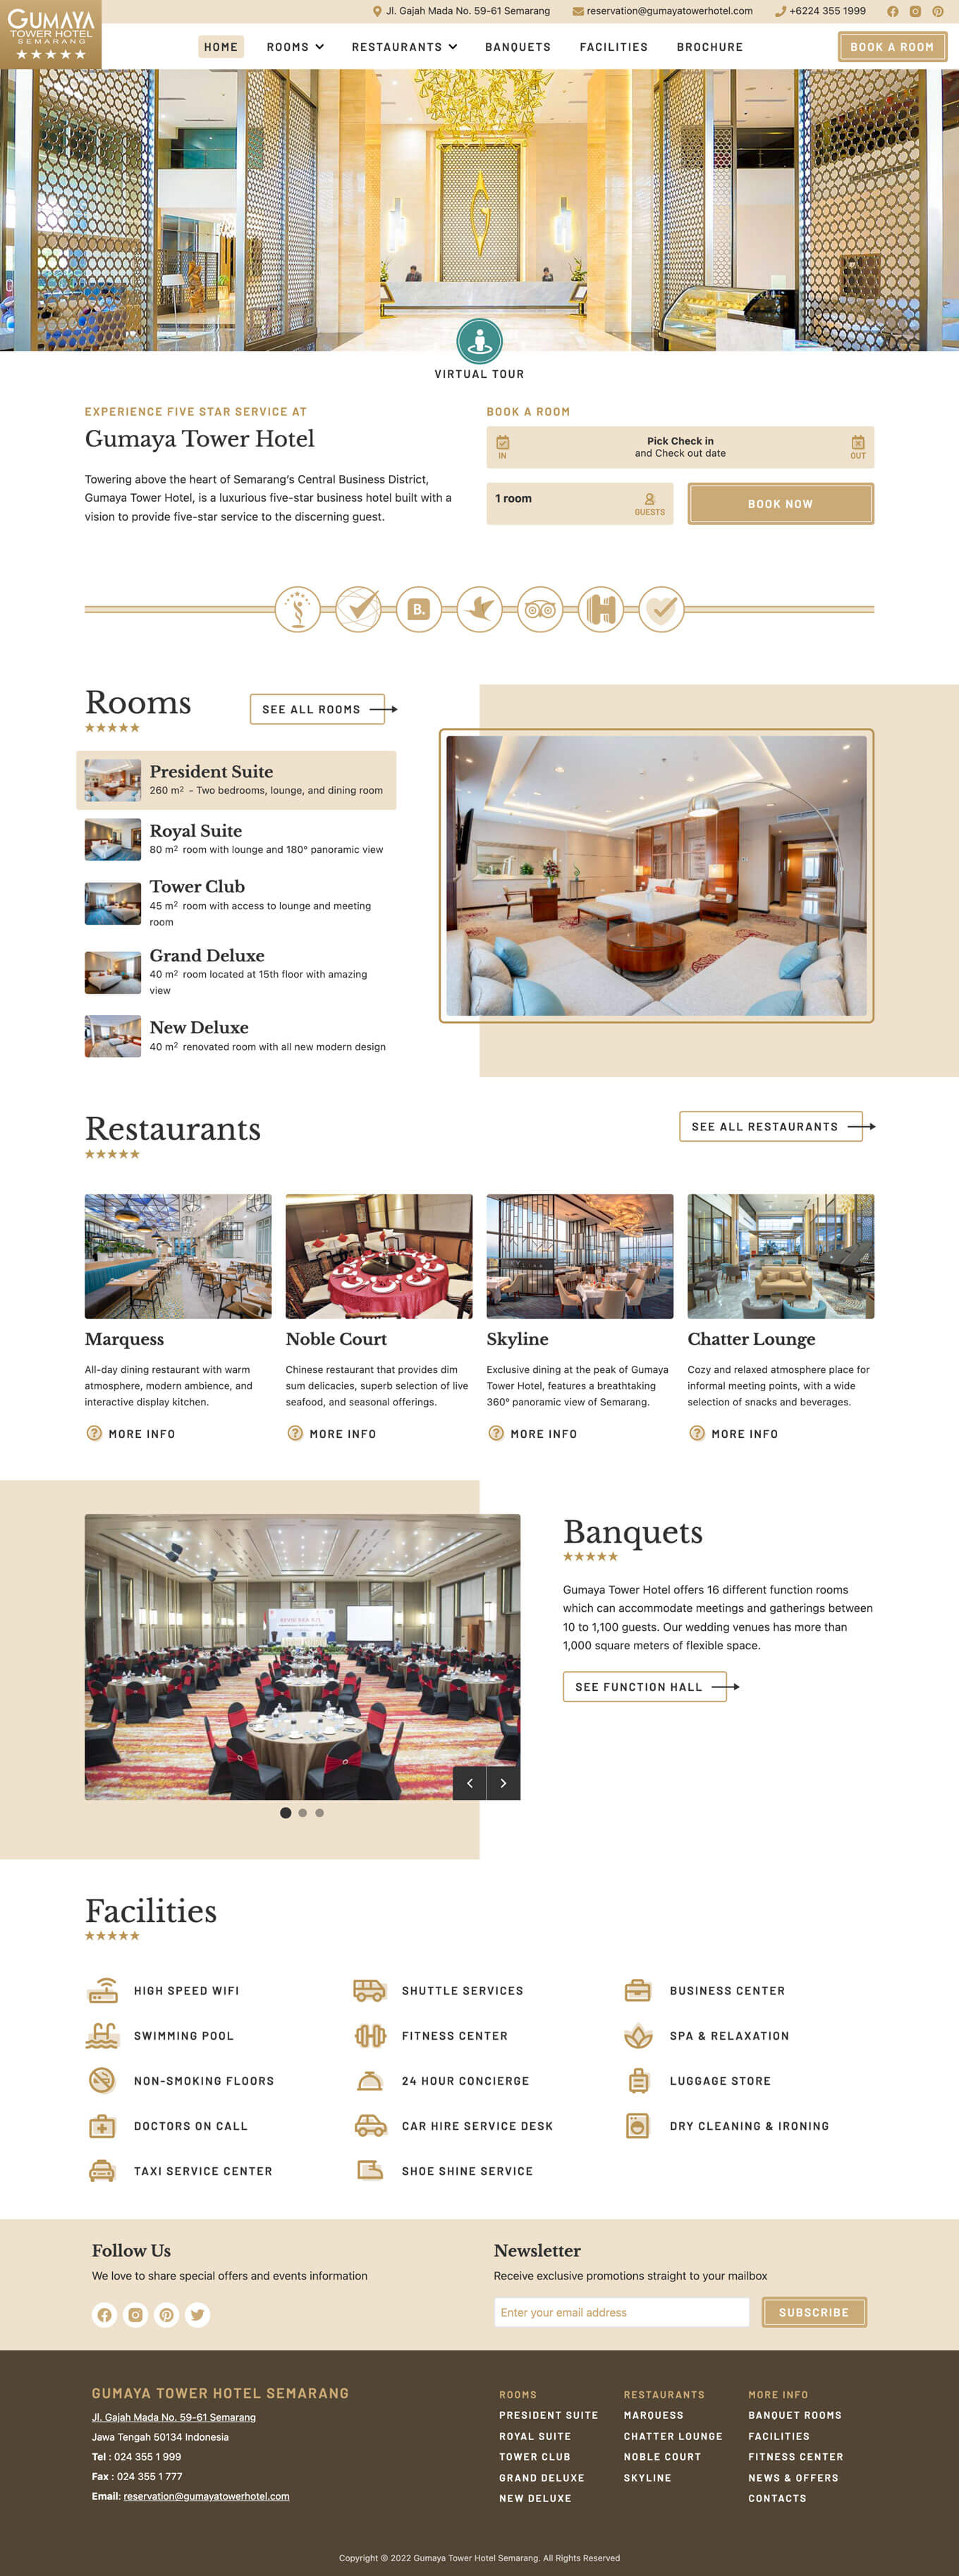 Gumaya Tower Hotel (New) Desktop Website Screenshot